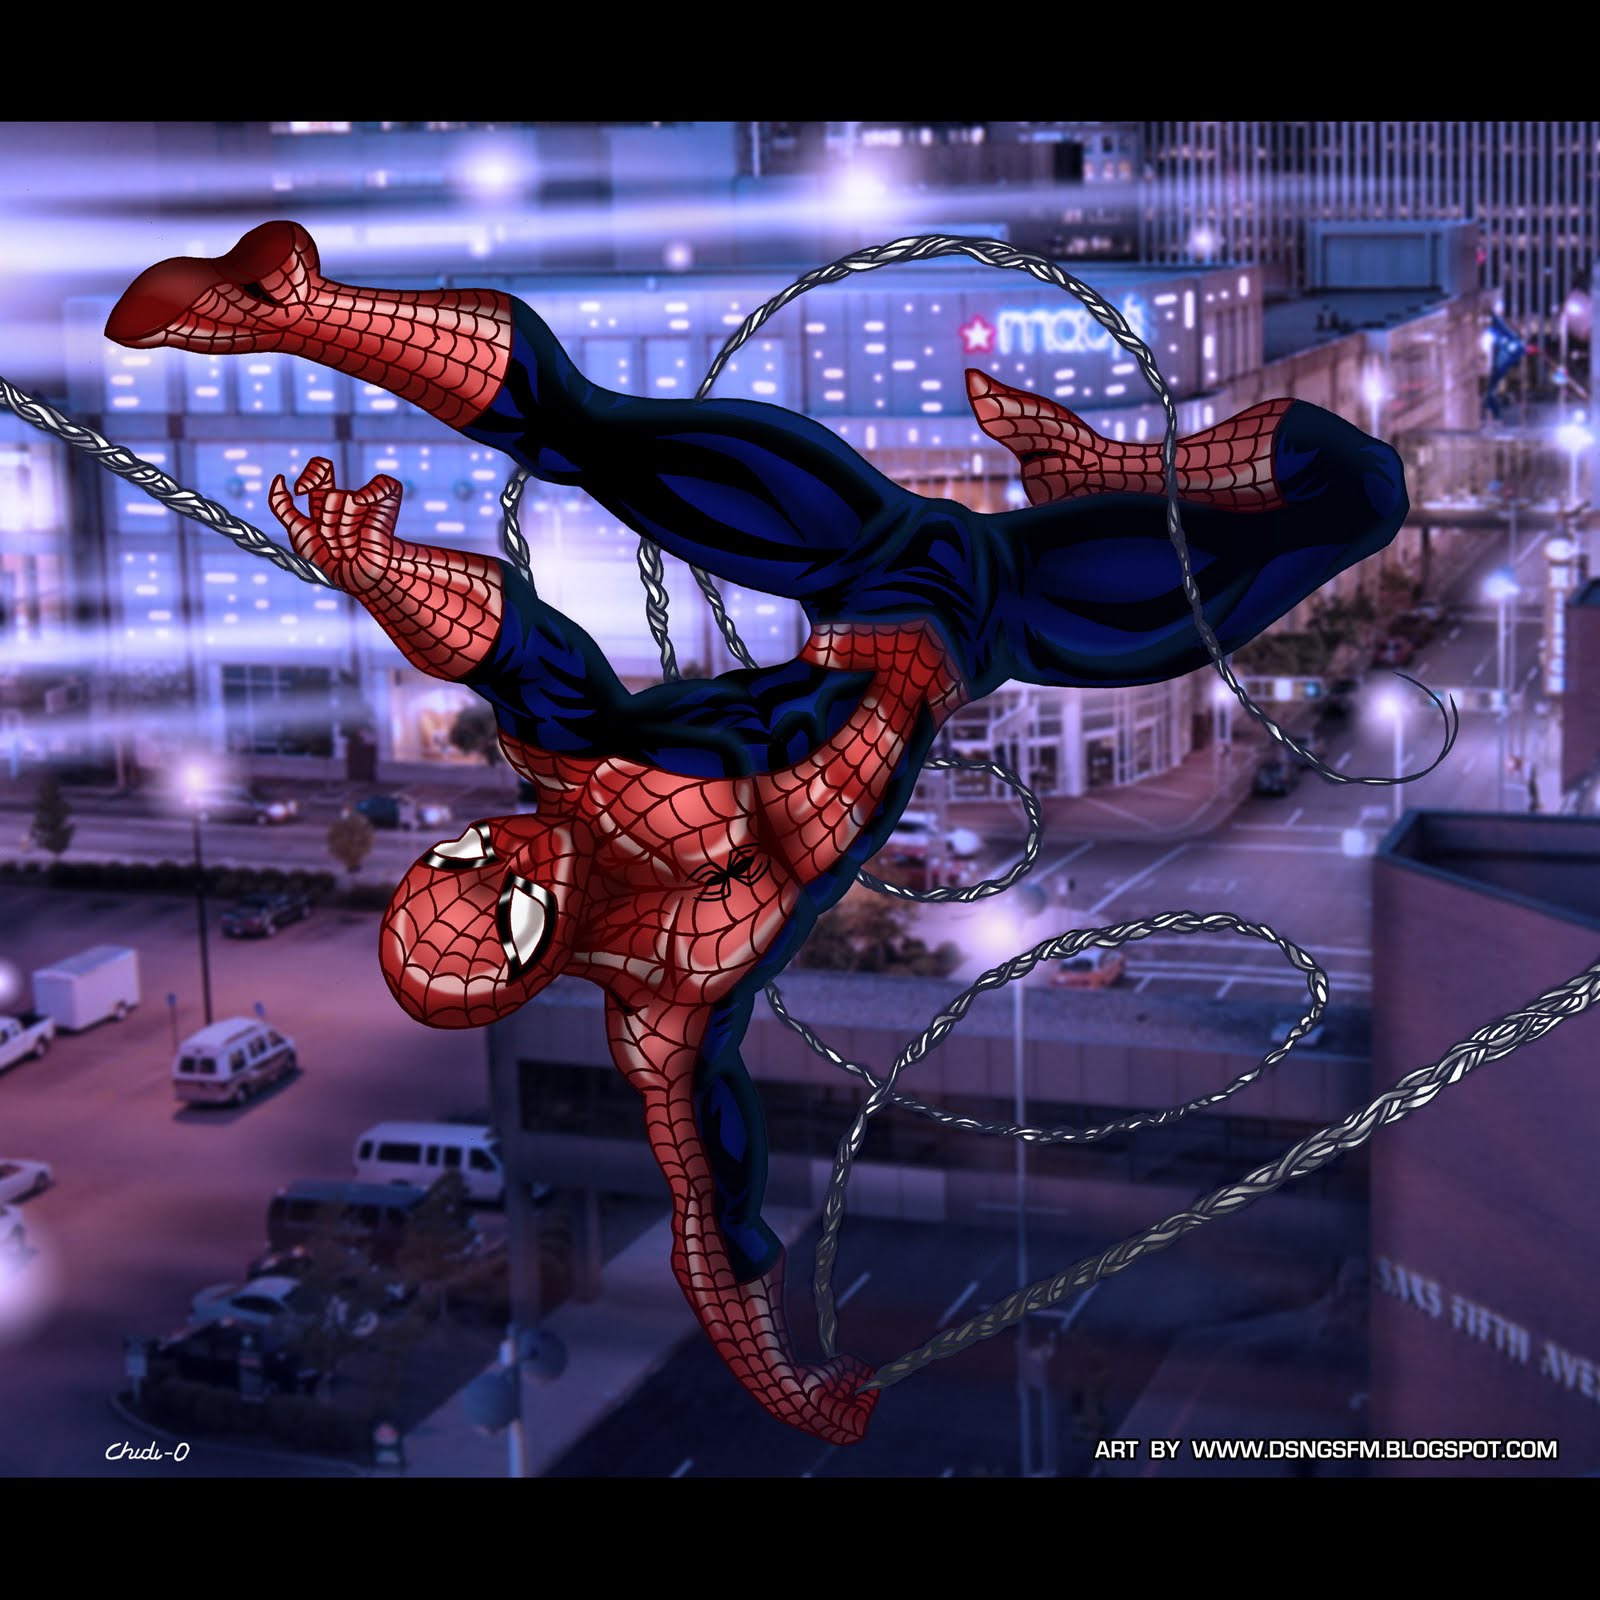 The Amazing Spider-Man (2012)